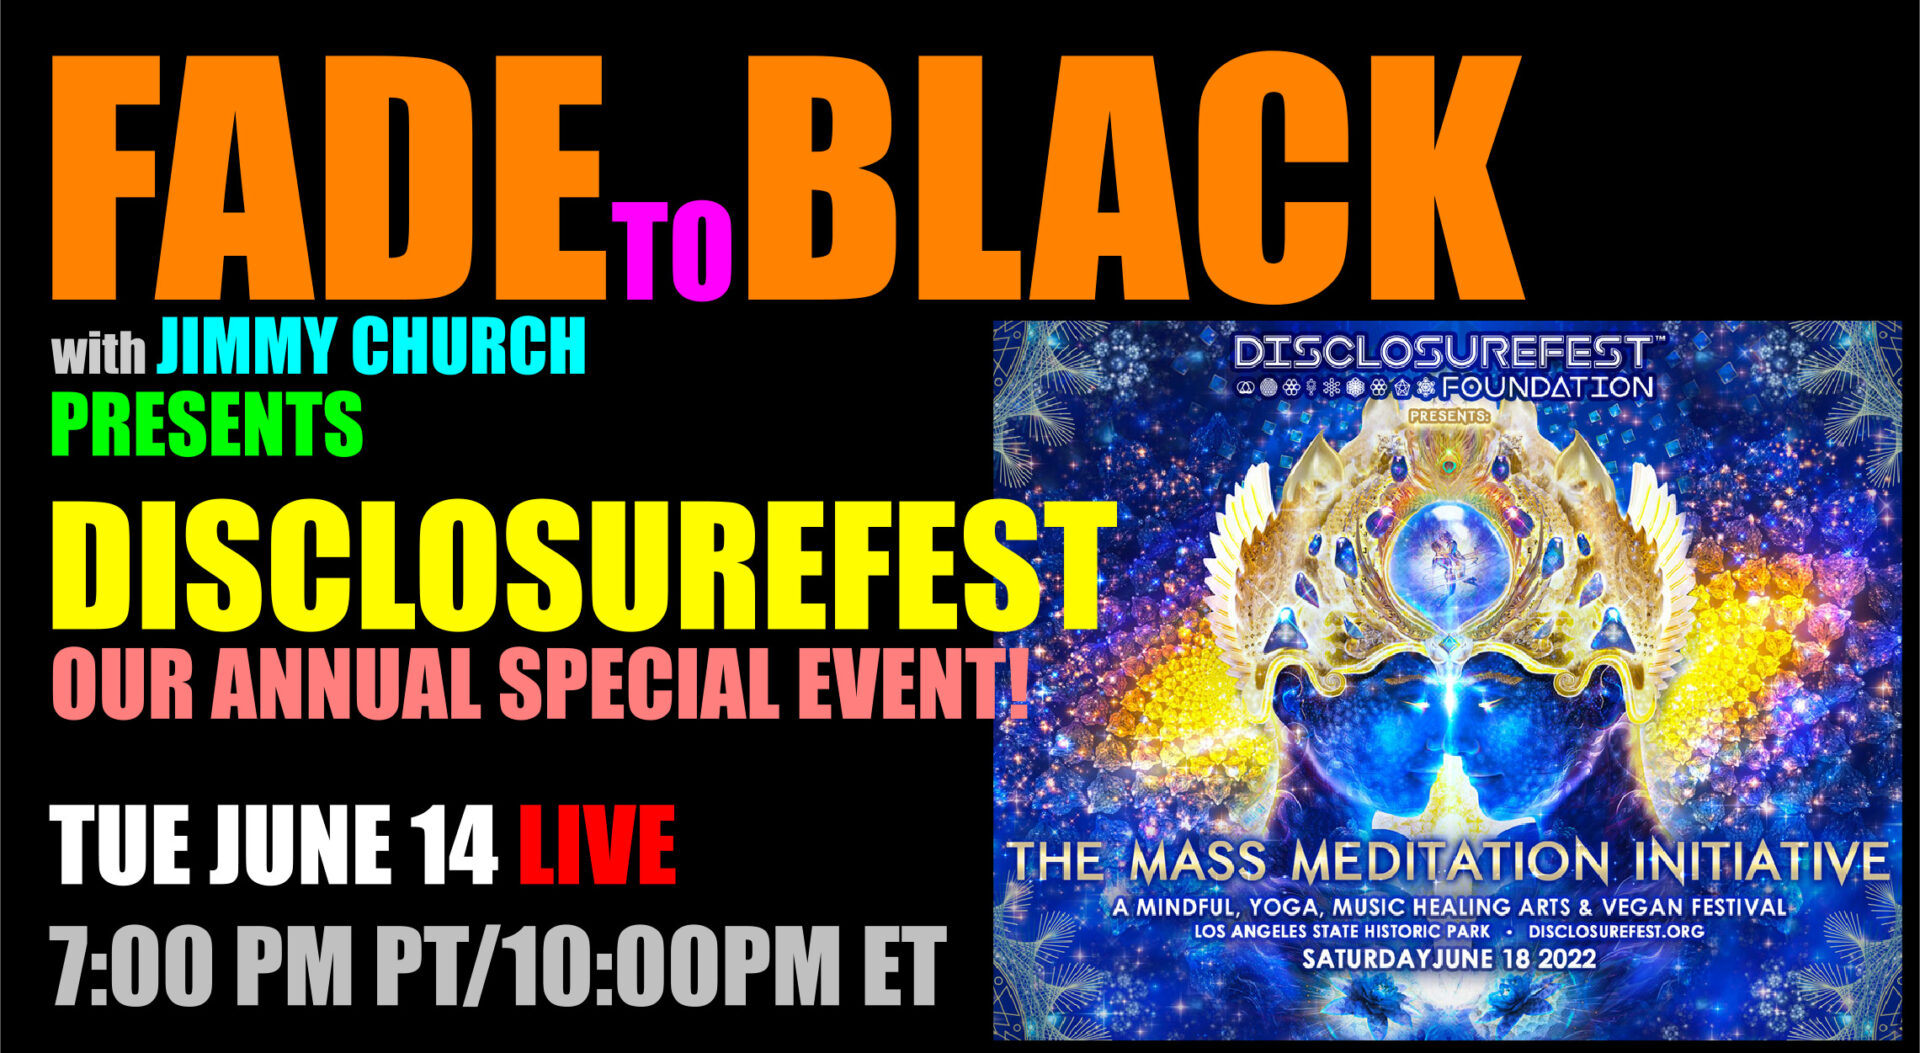 Fade To Black - DisclosureFest - June 14th